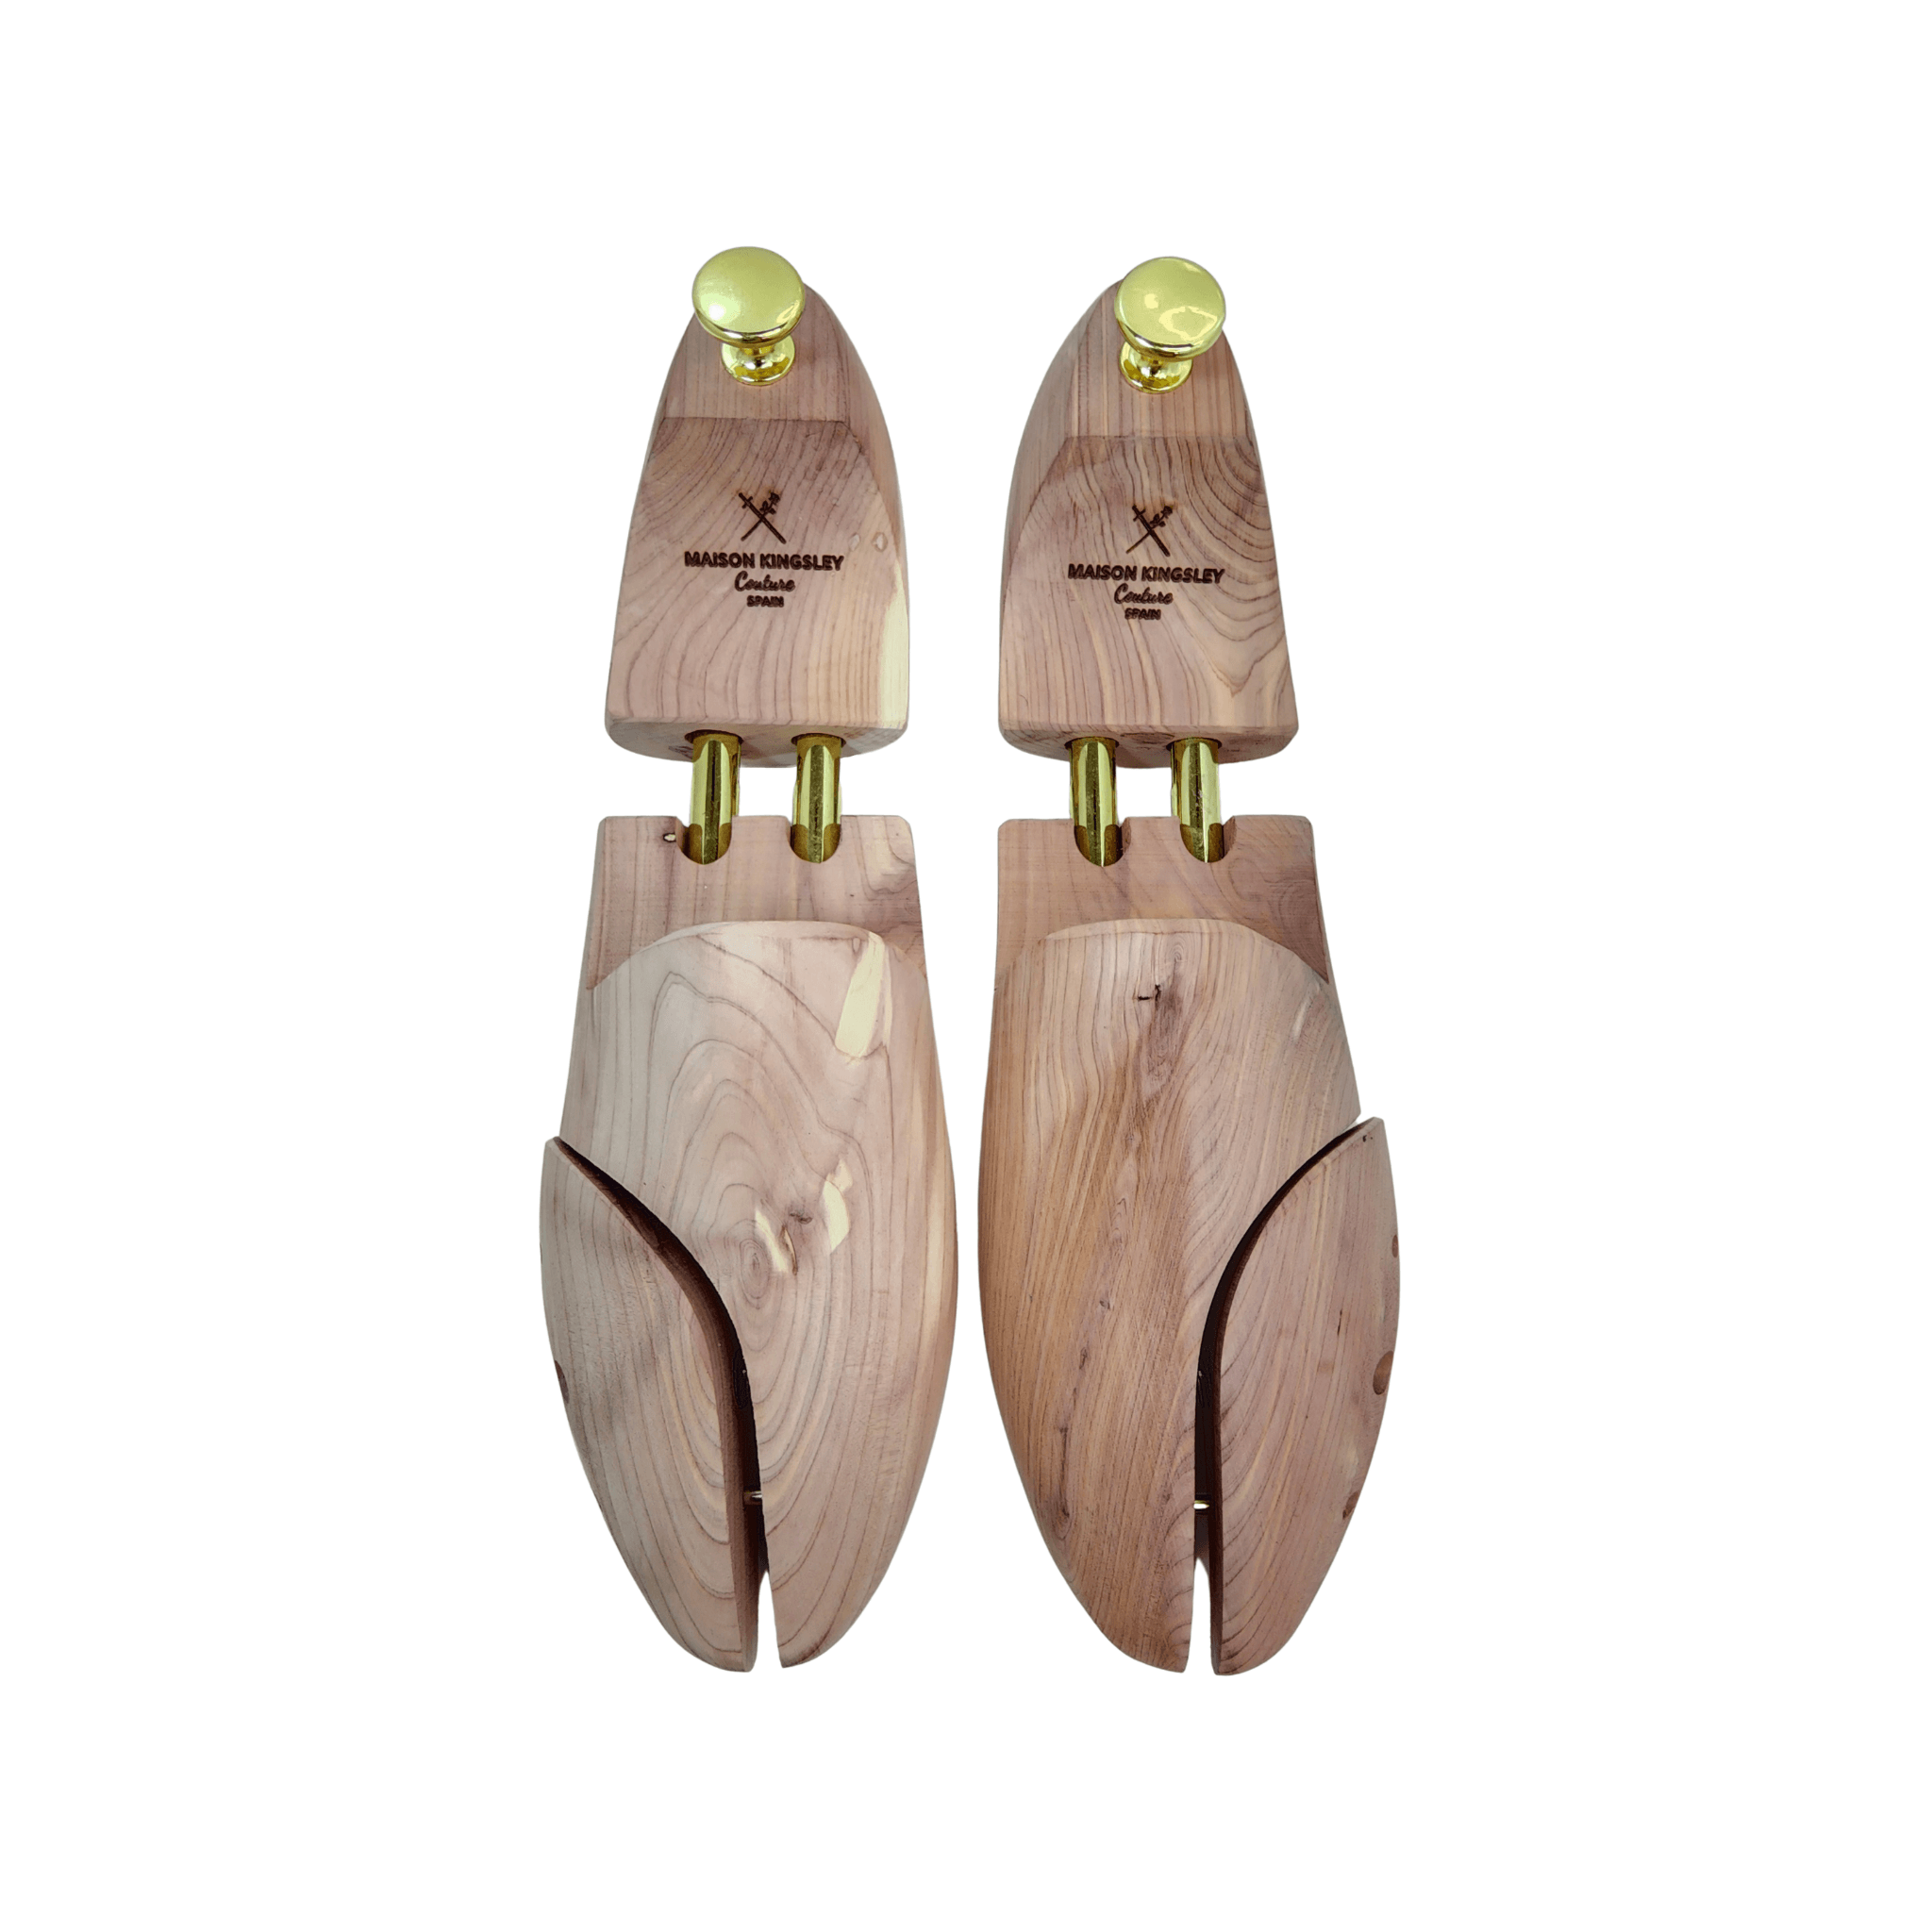 Maison Kingsley Men's Double Monk Boots in Sartorial Nailhead and Dark Brown Painted Calf - Maison de Kingsley Couture Harmonie et Fureur Spain